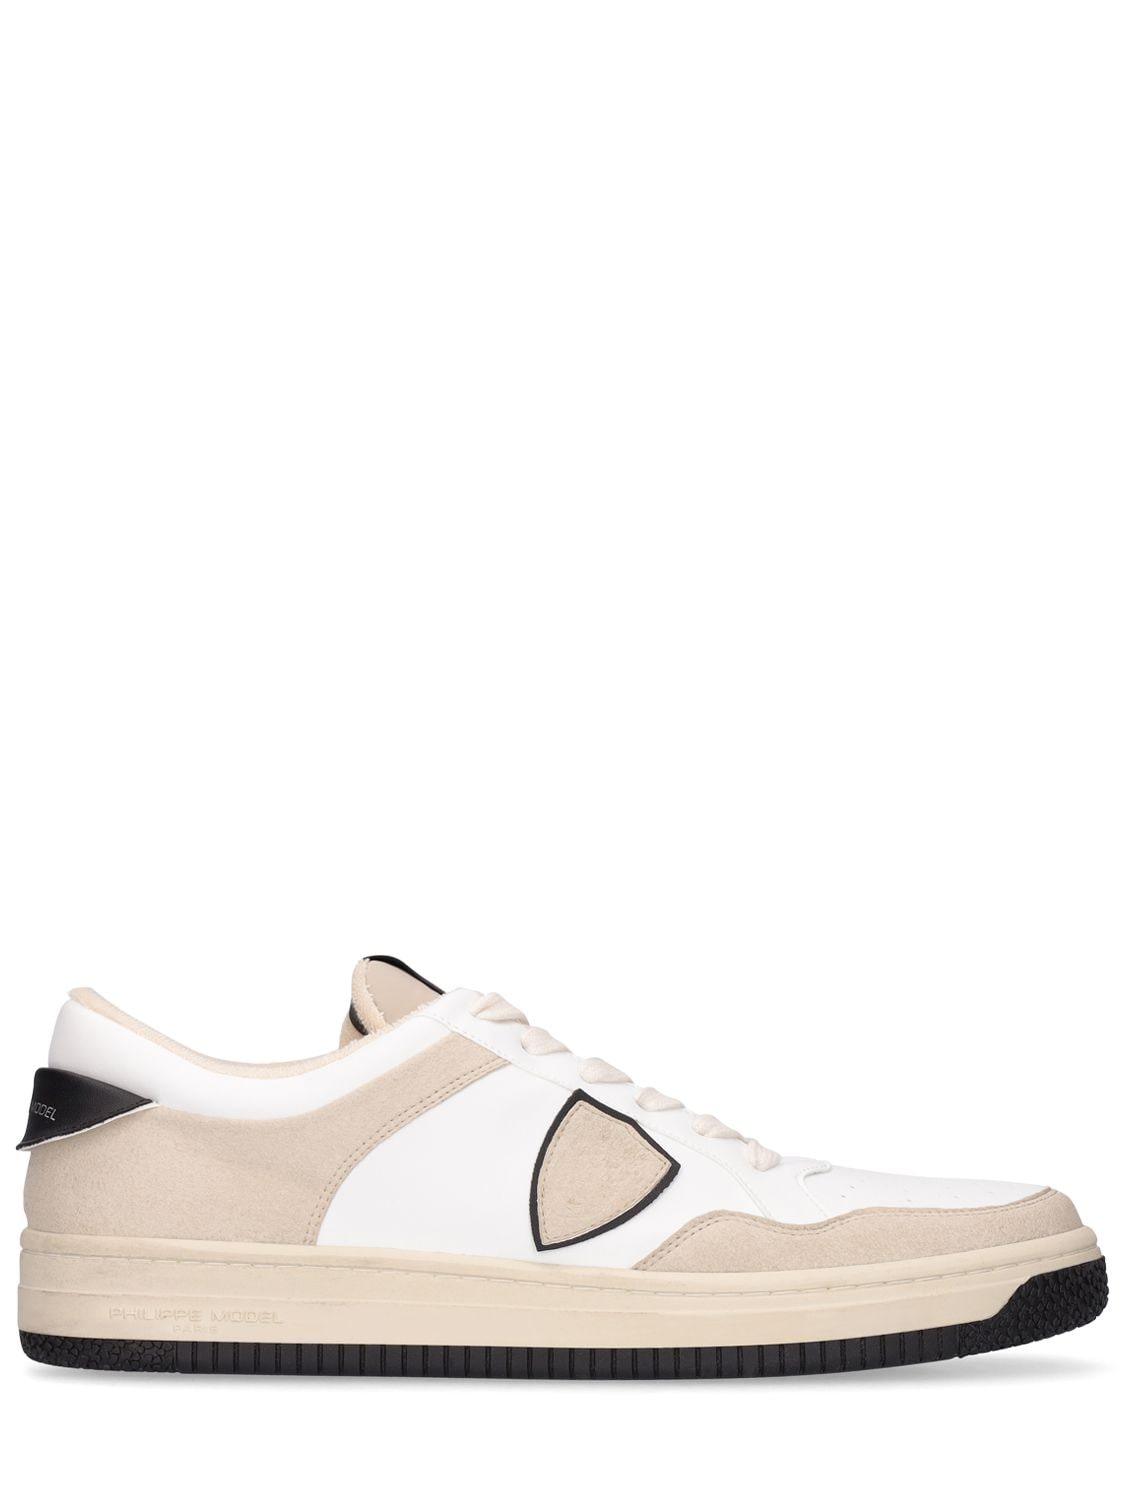 PHILIPPE MODEL - Lyon leather sneakers - White/Beige | Luisaviaroma